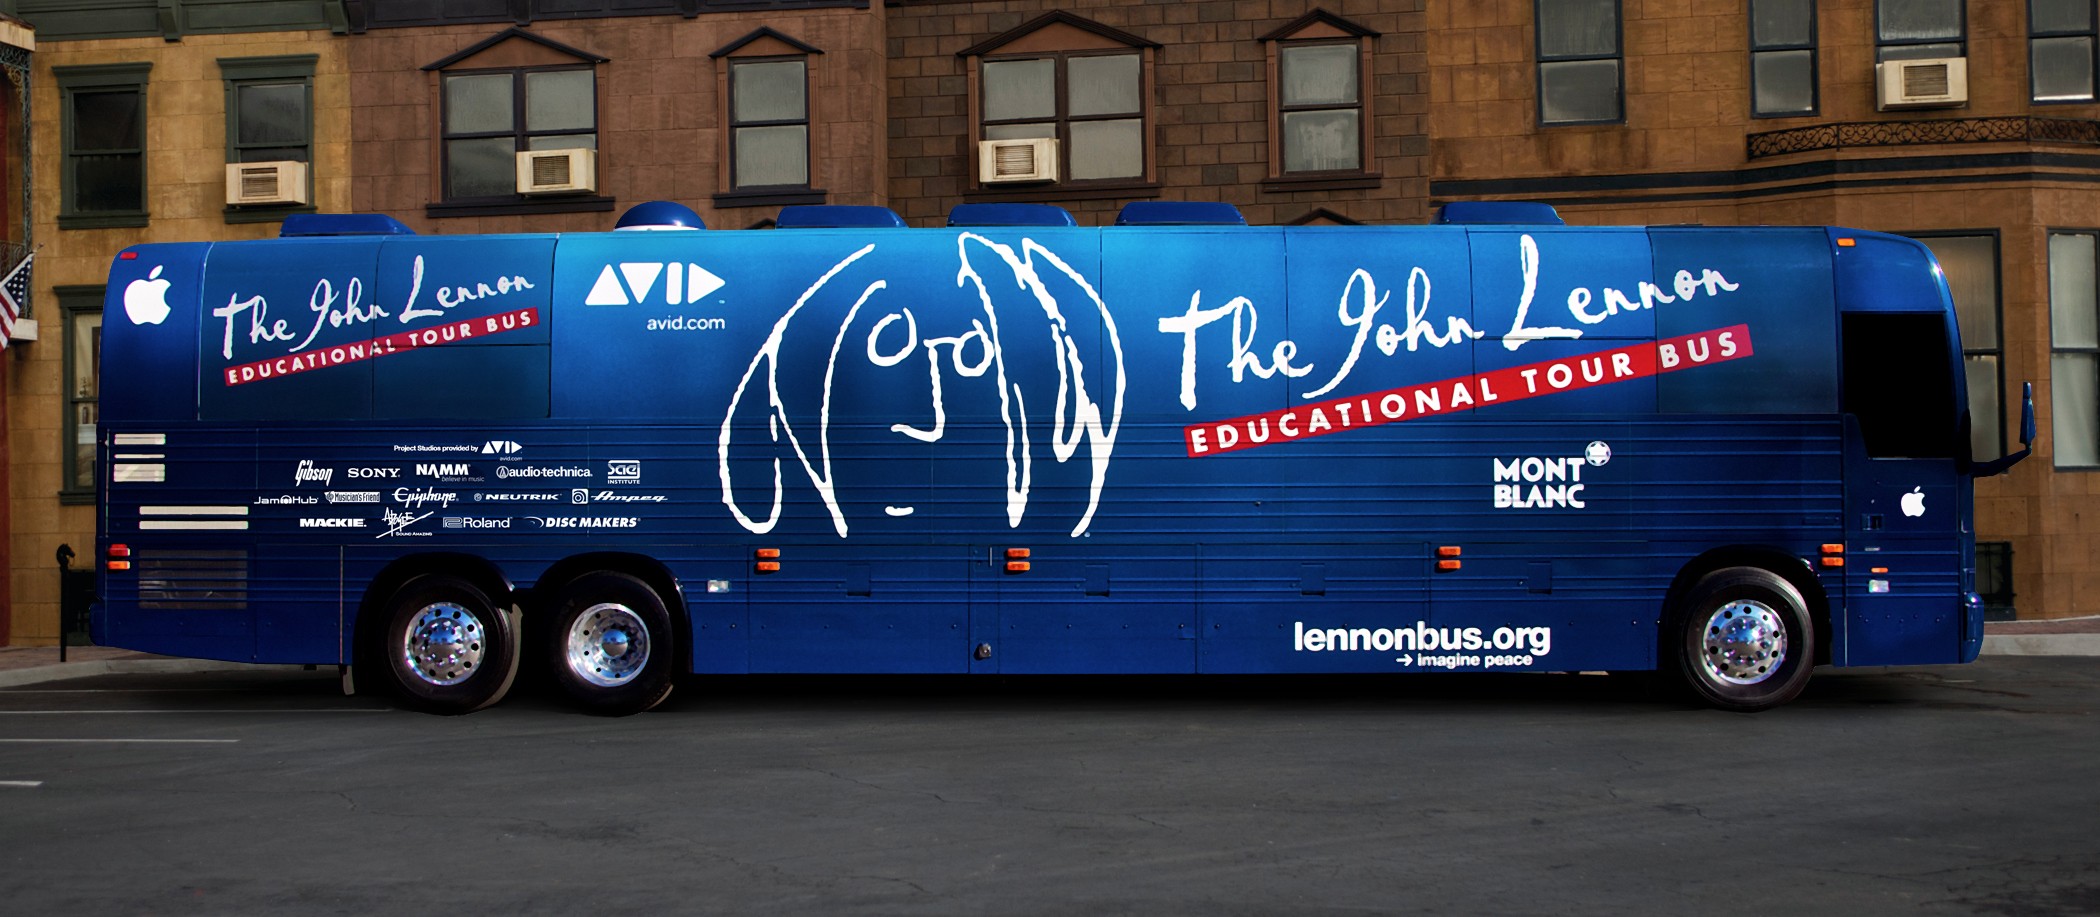 The John Lennon Educational Tour Bus stops in SA today